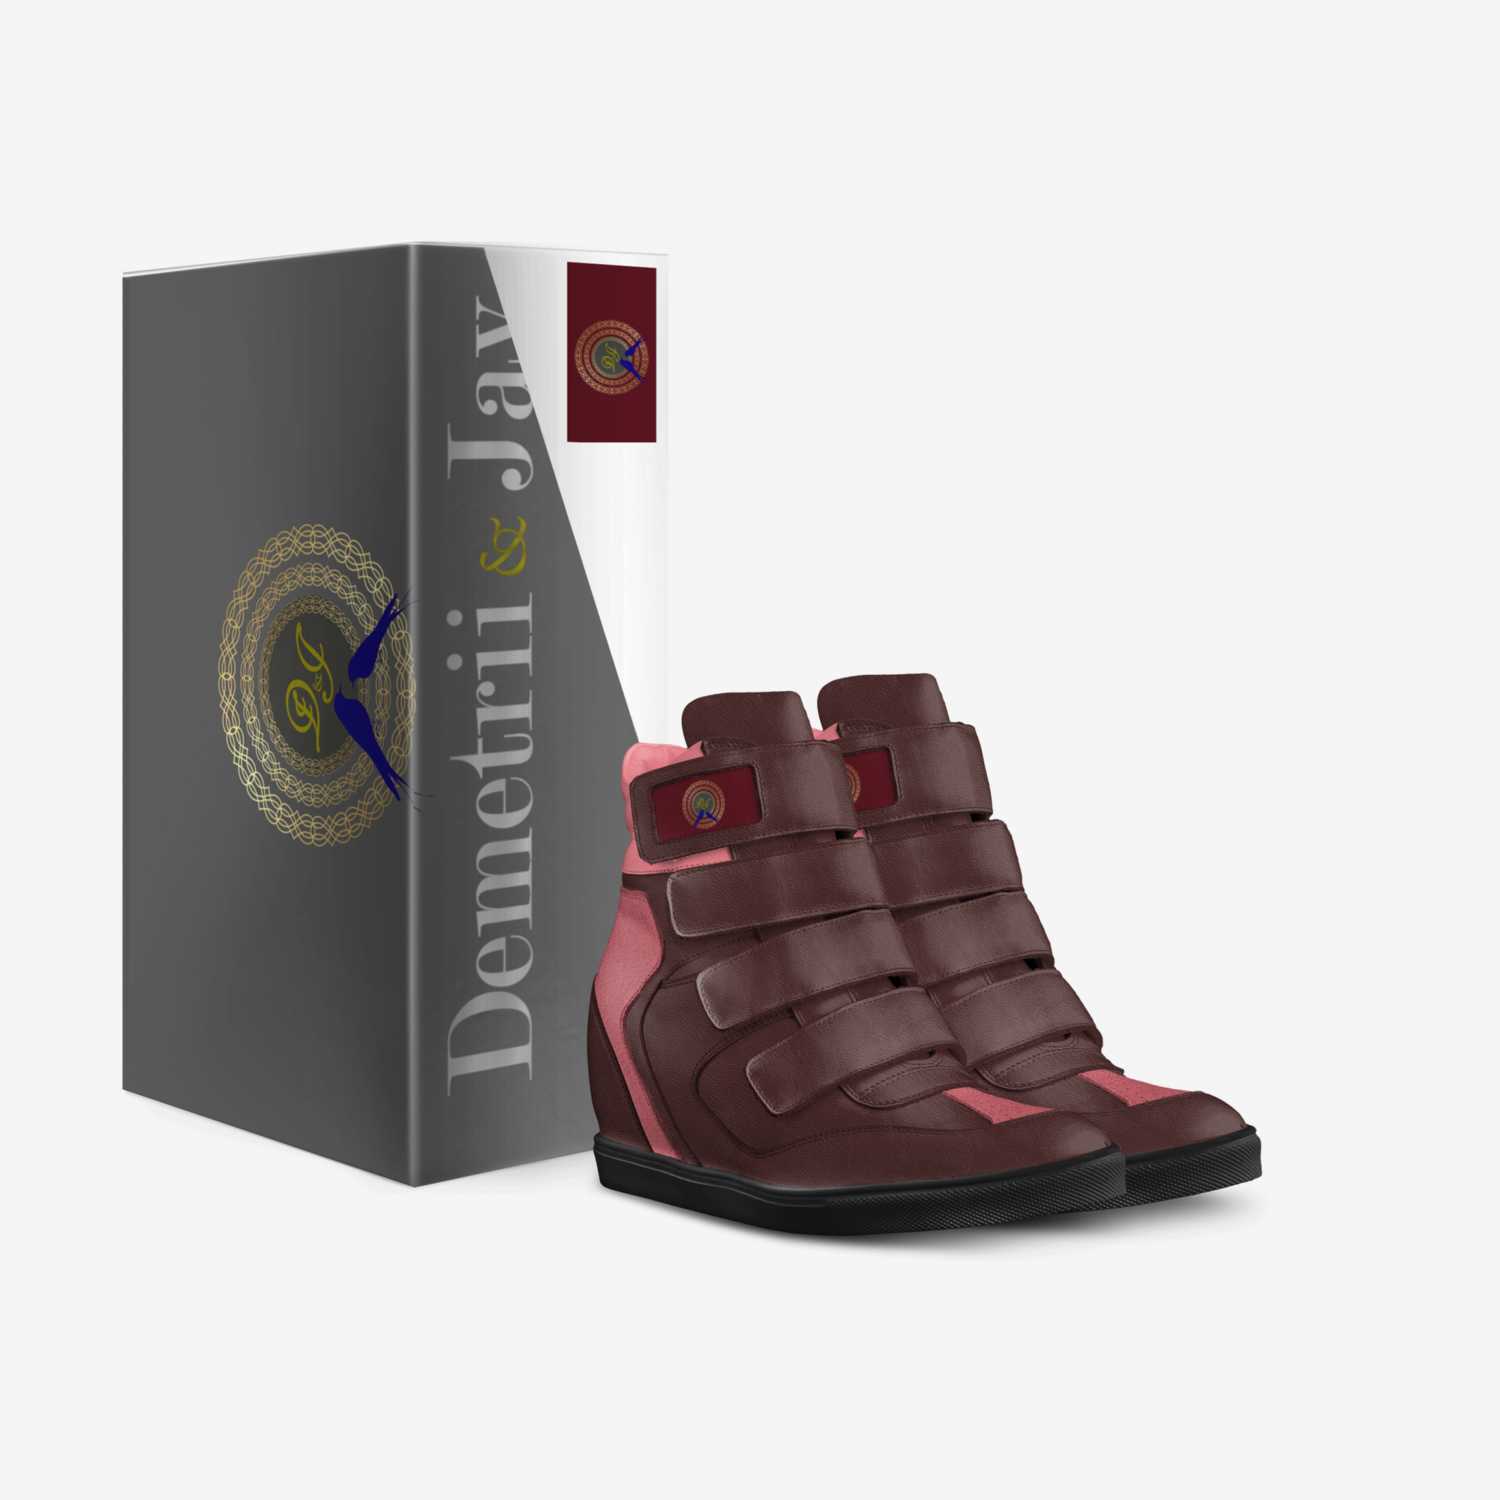 Demetrii & Jay custom made in Italy shoes by Demetrii & Jay | Box view